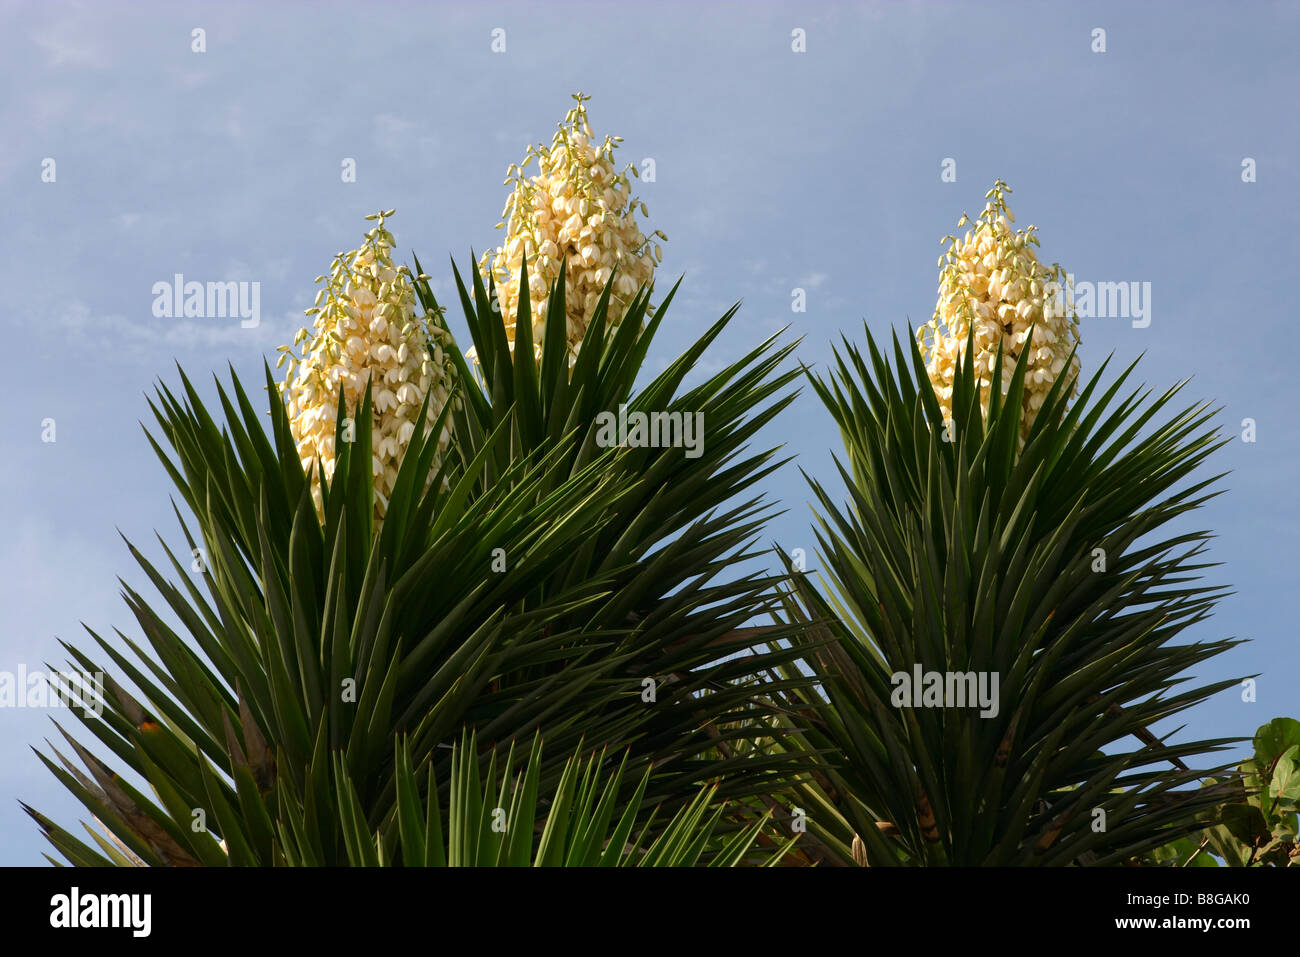 Caribbean vegetation, flora, fauna, cuba. Green palm with three white flow.ers Stock Photo